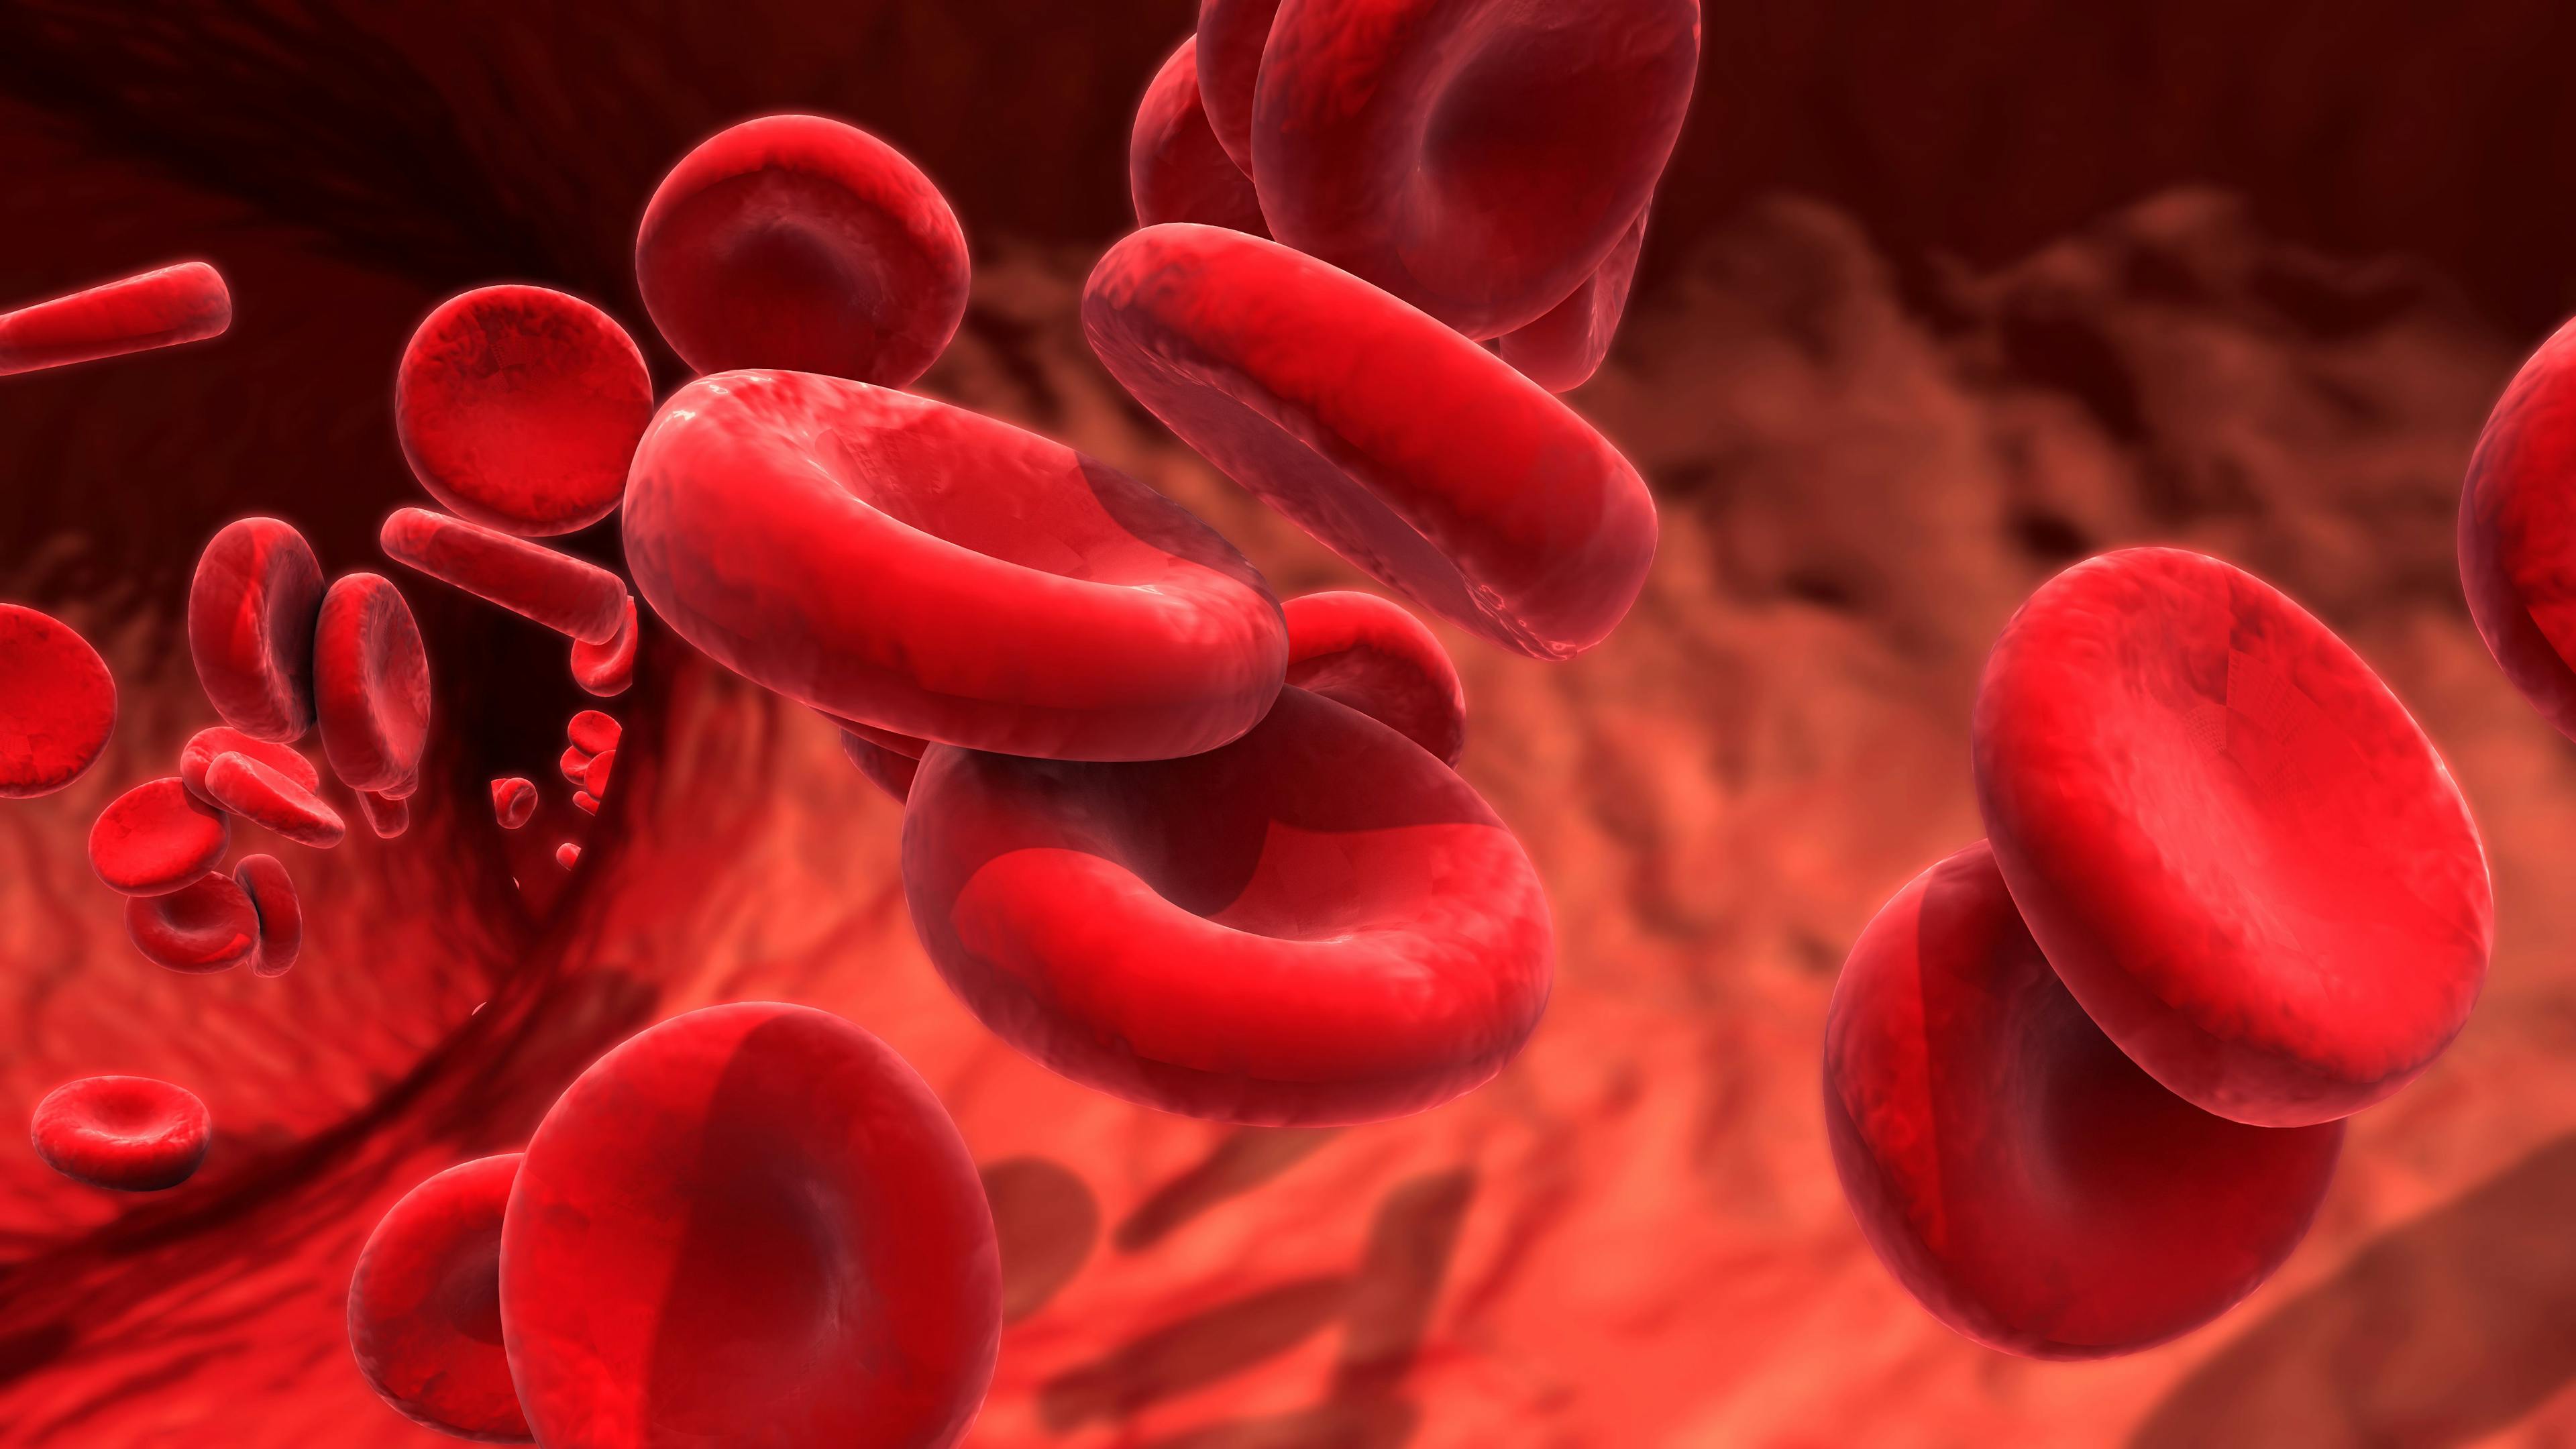 Luspatercept Improves Symptoms in Nontransfusion Dependent β-Thalassemia 